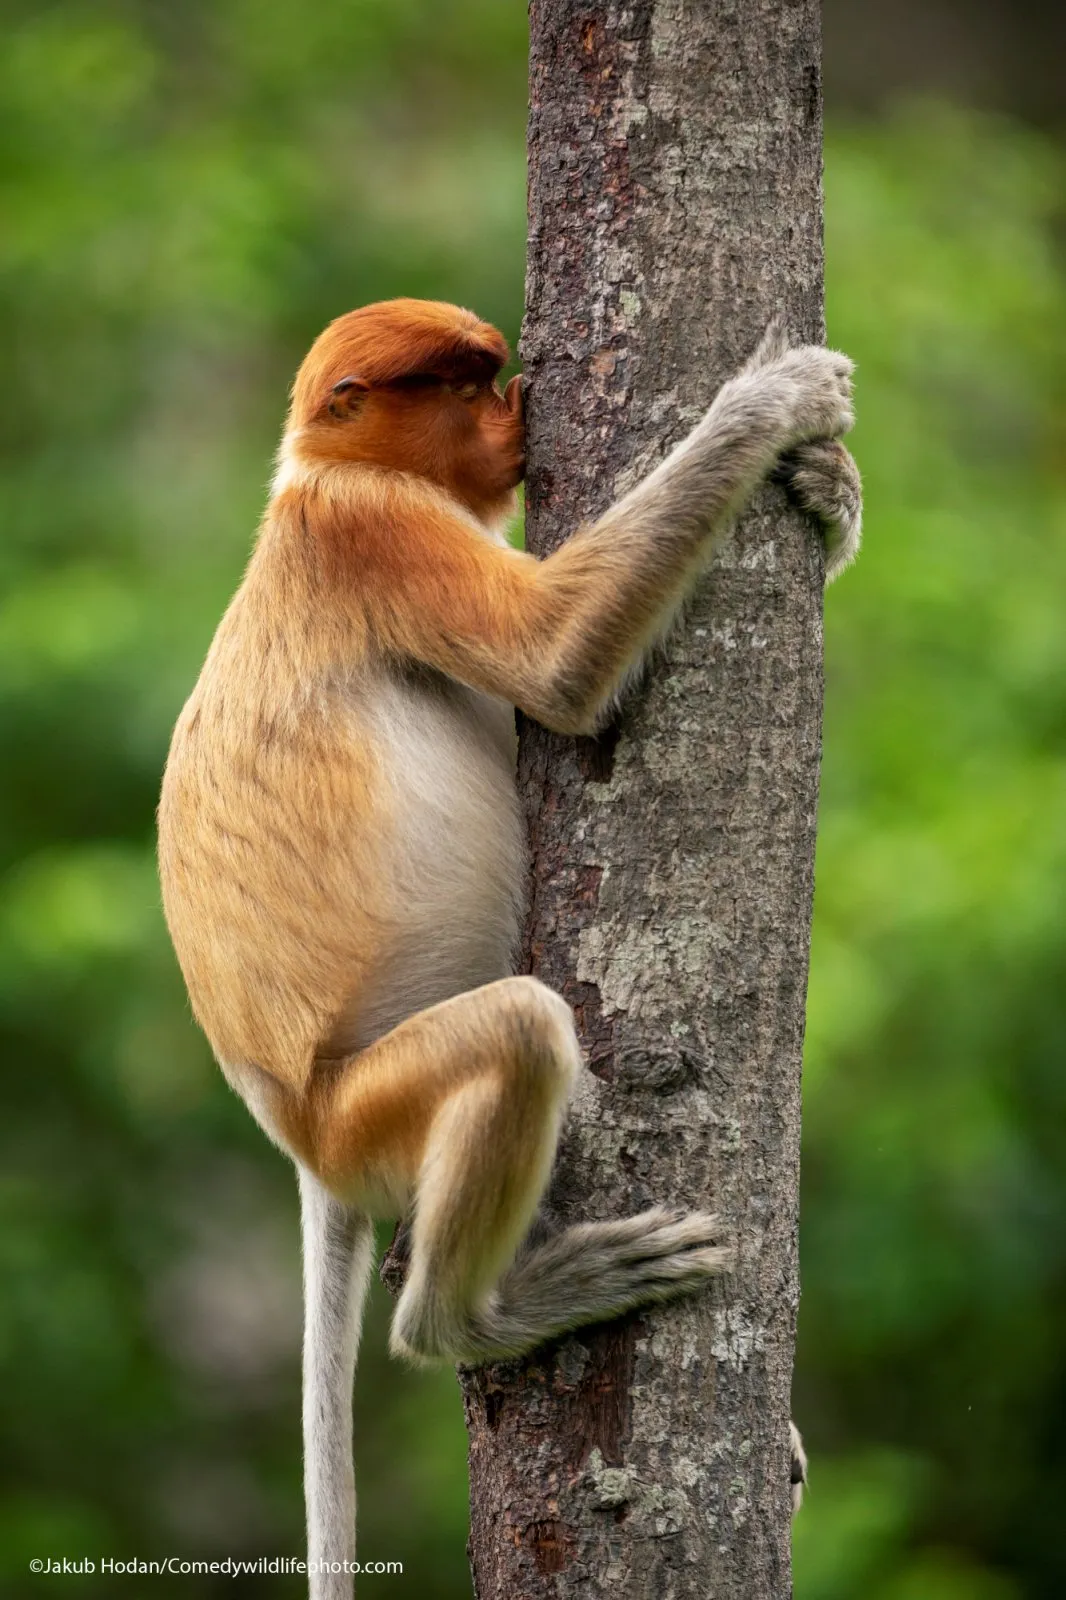 A male Male proboscis monkey pressed his nose into a tree